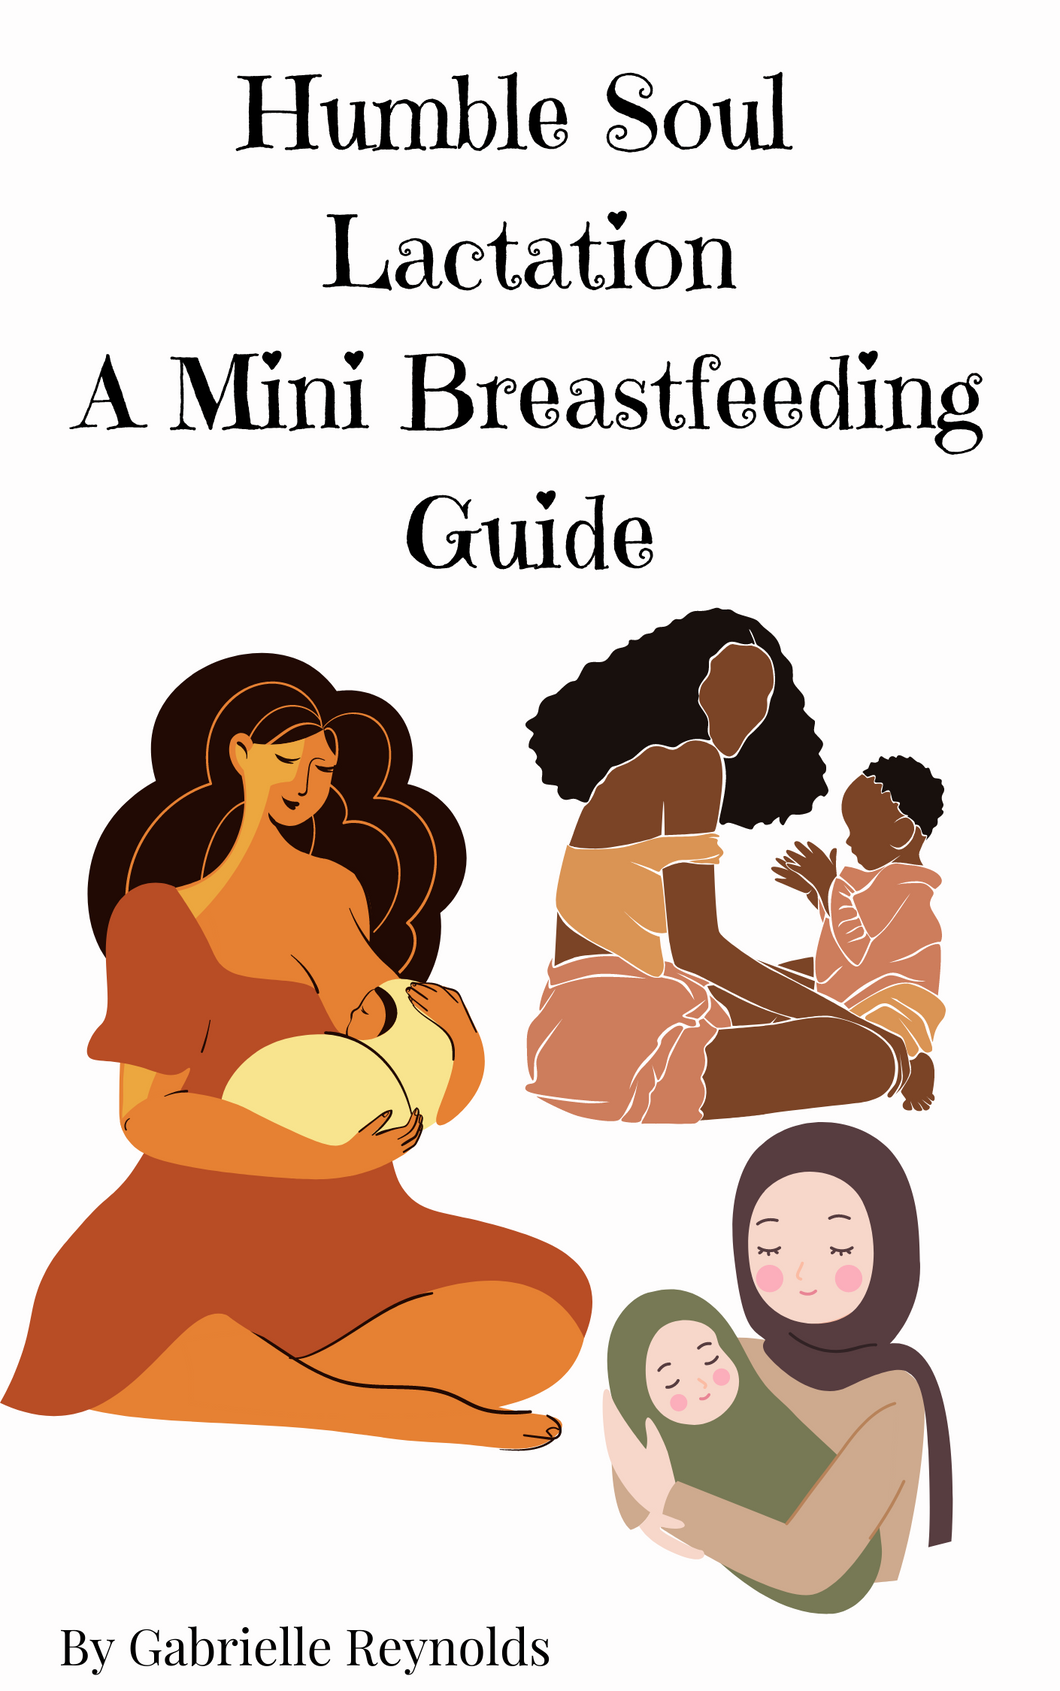 A Mini Breastfeeding Guide